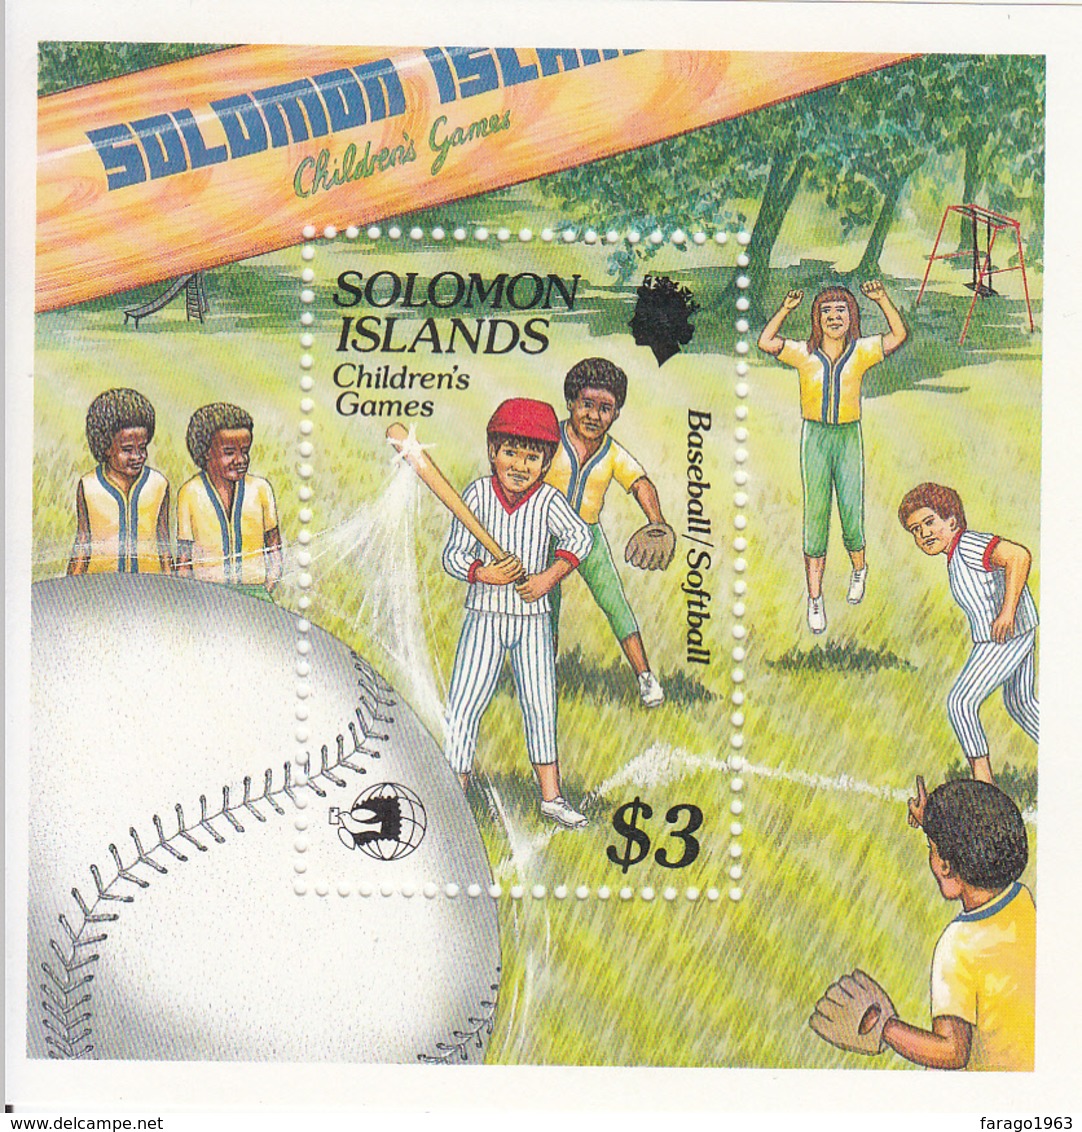 1989 Solomon Islands Children’s Games Playing Baseball / Softball  Souvenir Sheet Of 1 MNH - Salomoninseln (Salomonen 1978-...)